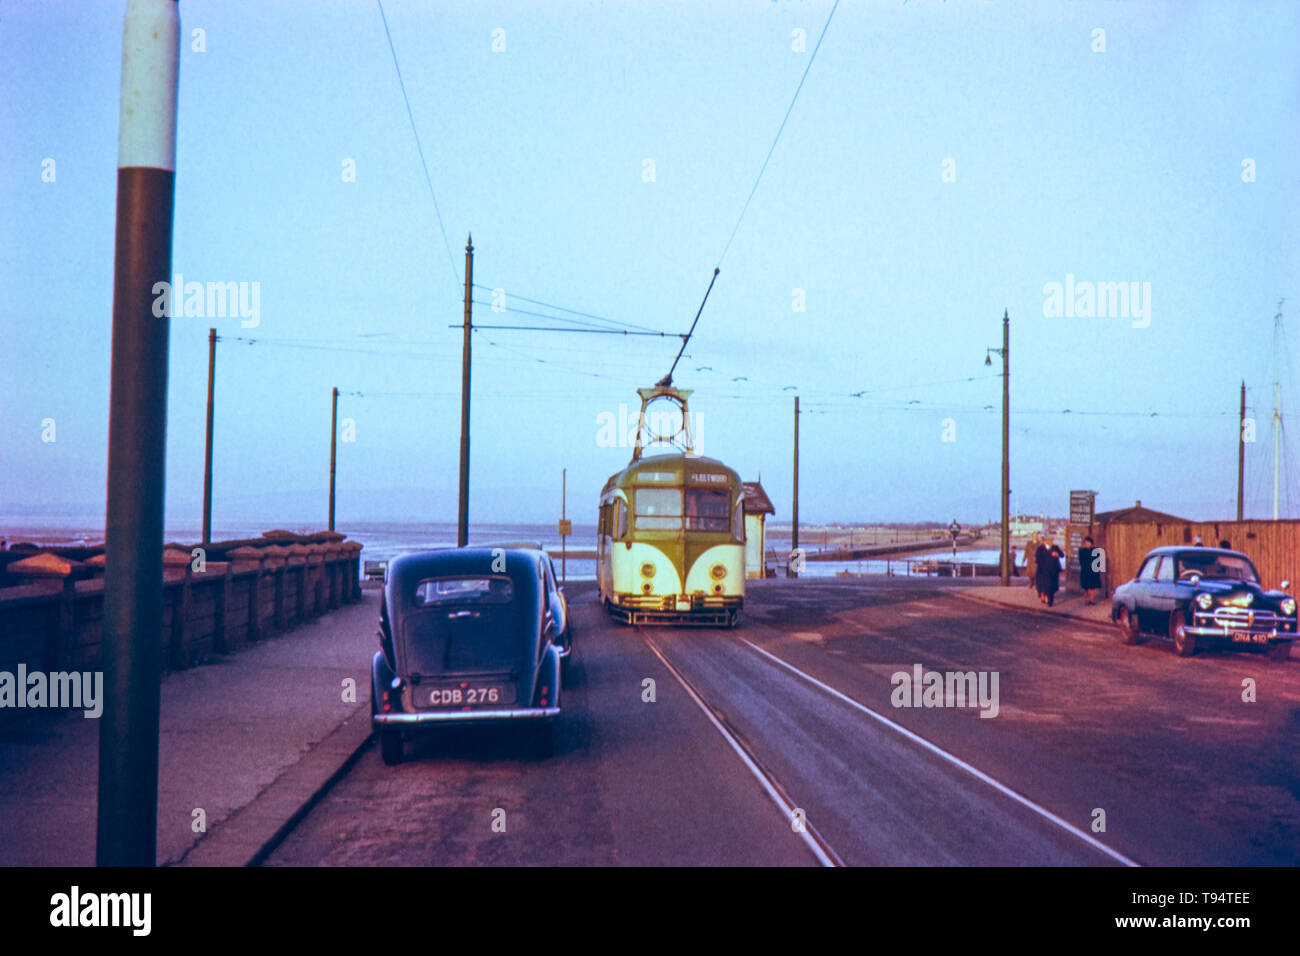 Single Deck Blackpool Tram auf dem Weg nach Fleetwood. Bild, März 1956. Stockfoto